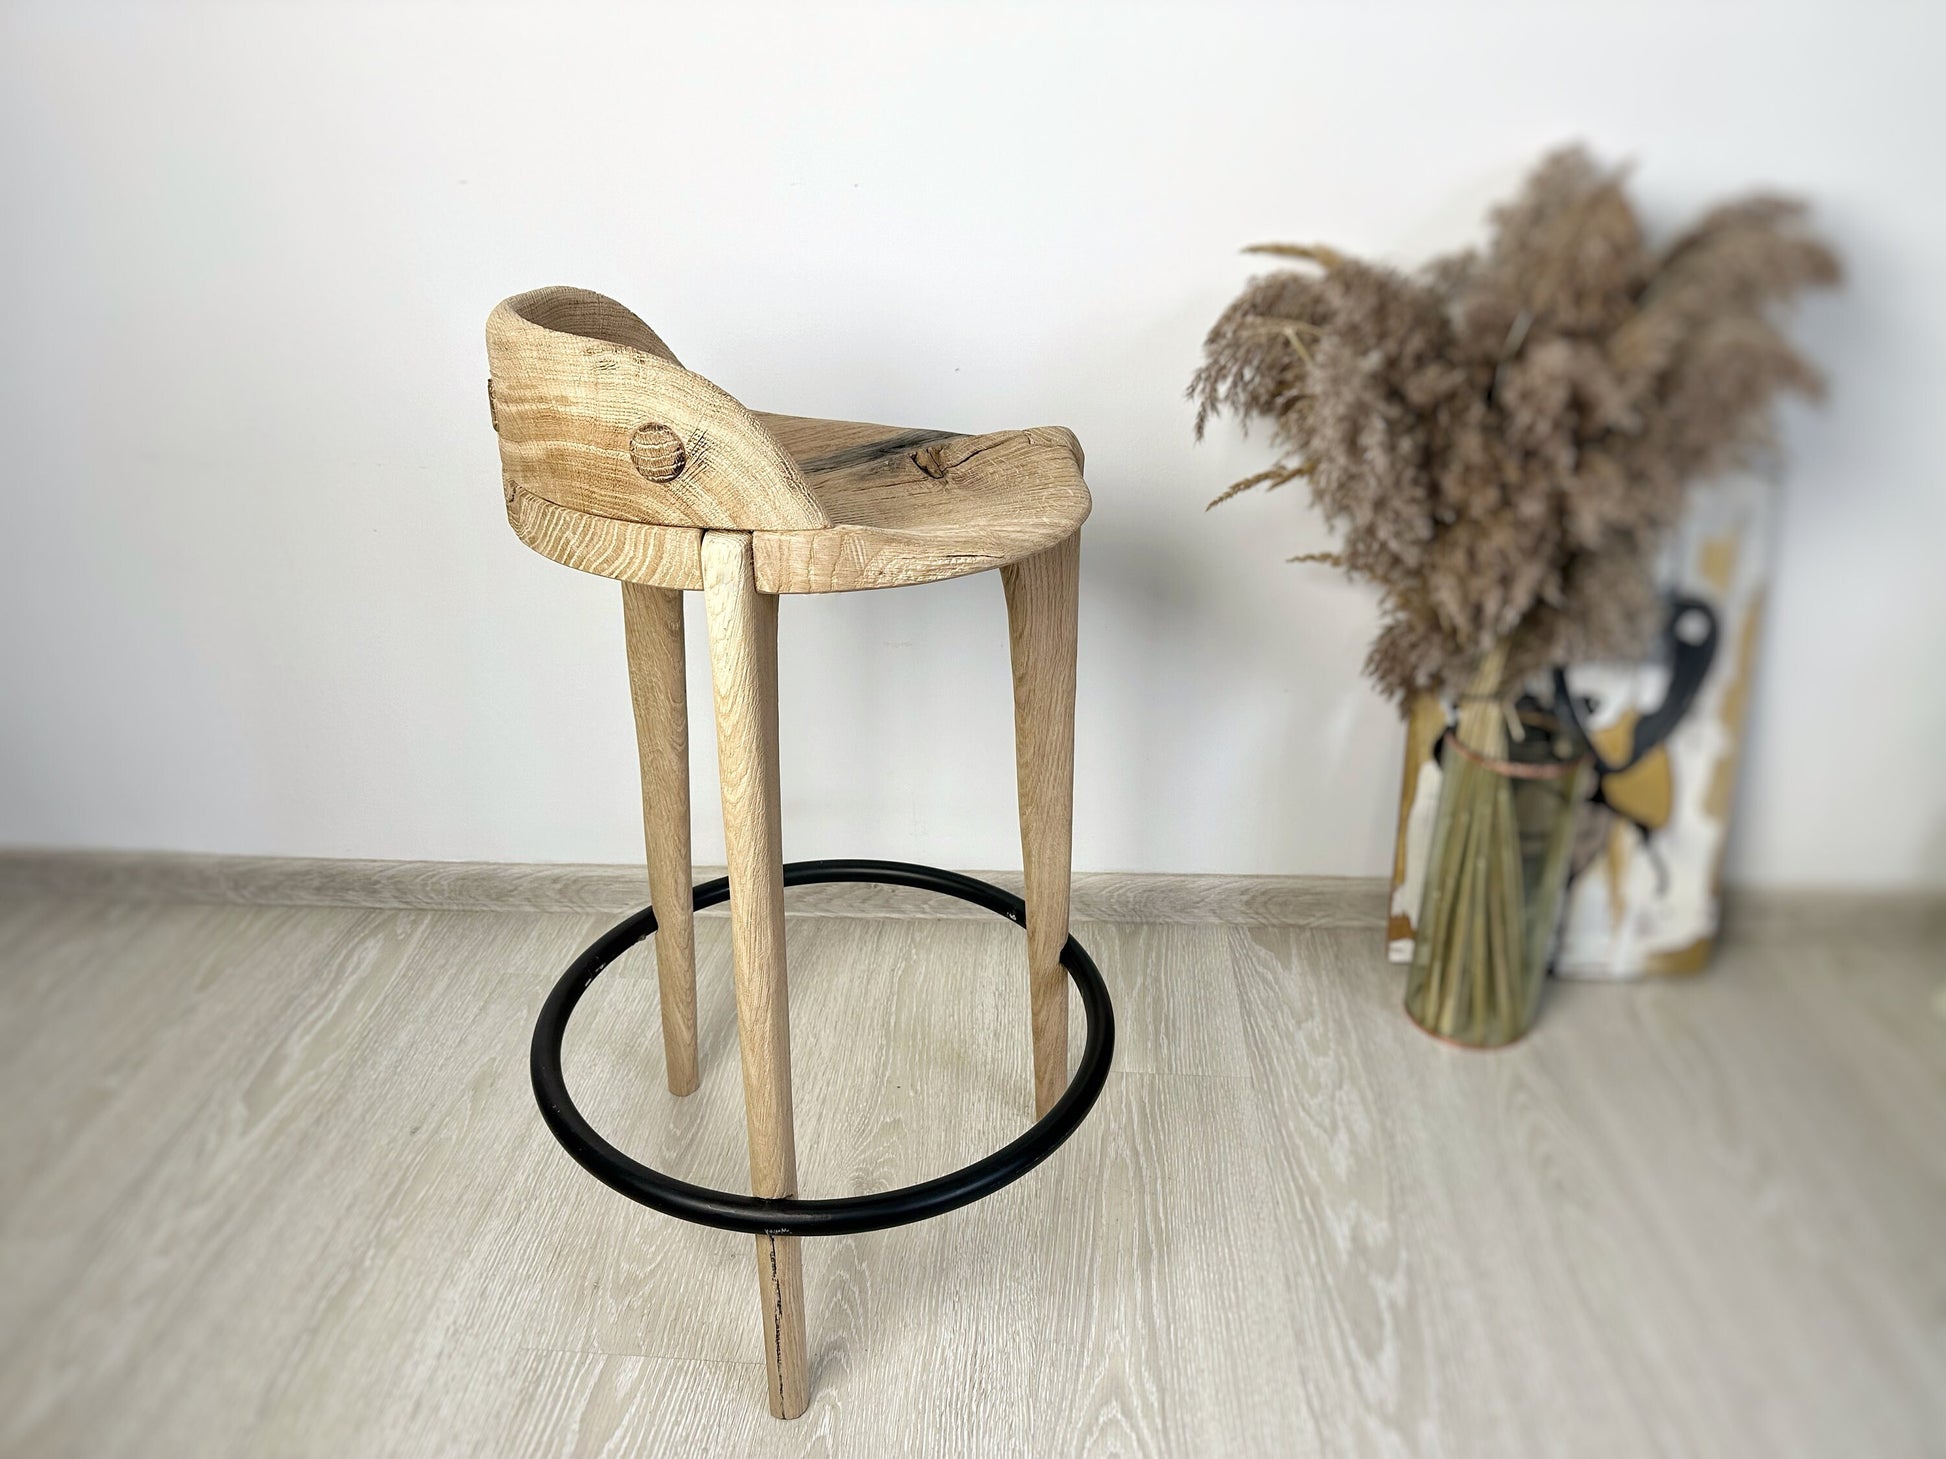 Handmade wood bar stools with backs, three legged stool, chair seat, bar chair, dining chair, reclaimed wood, milking stool, island stools